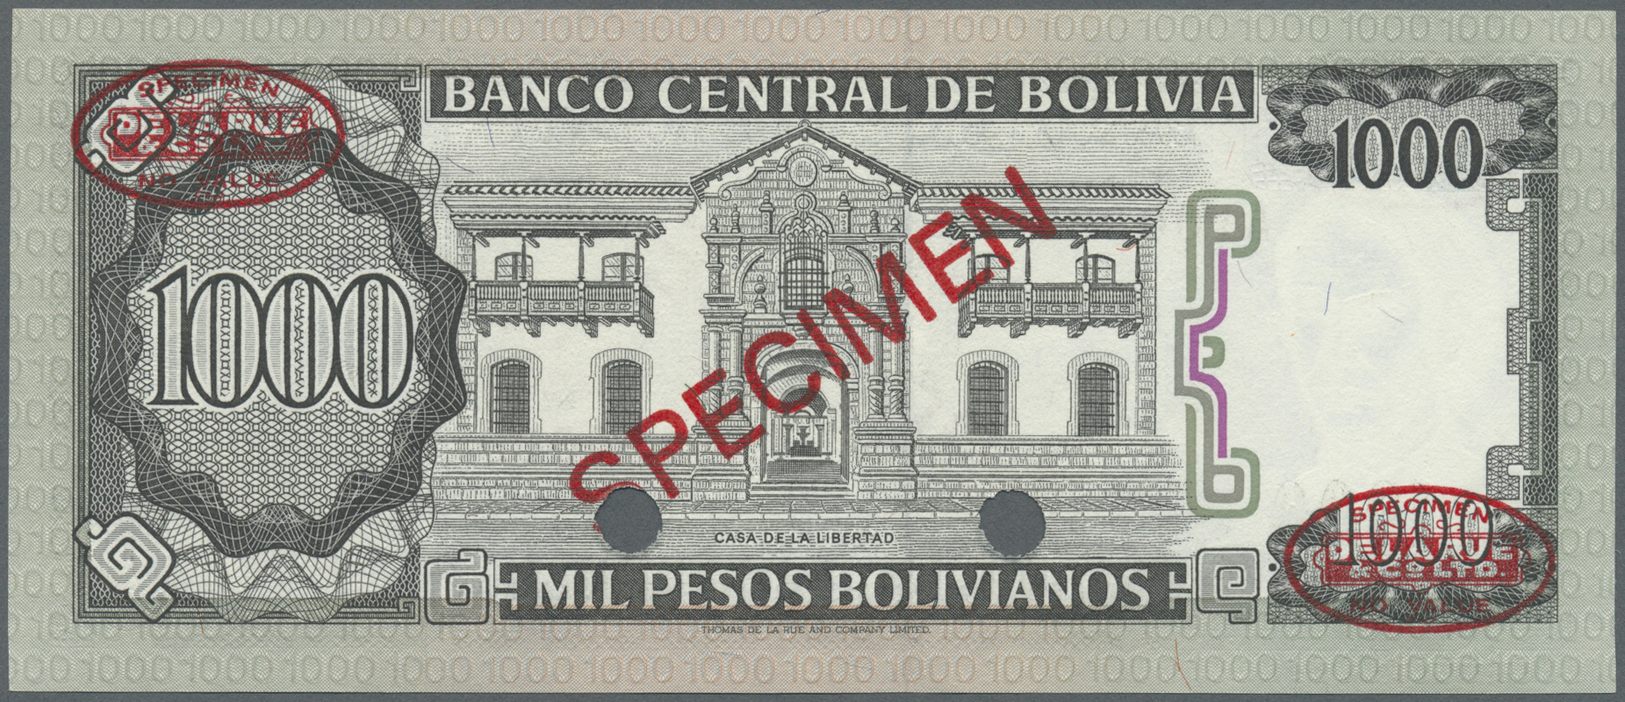 00323 Bolivia / Bolivien: 1000 Bolivianos 1962 Specimen P. 167s In Condition: UNC. - Bolivia